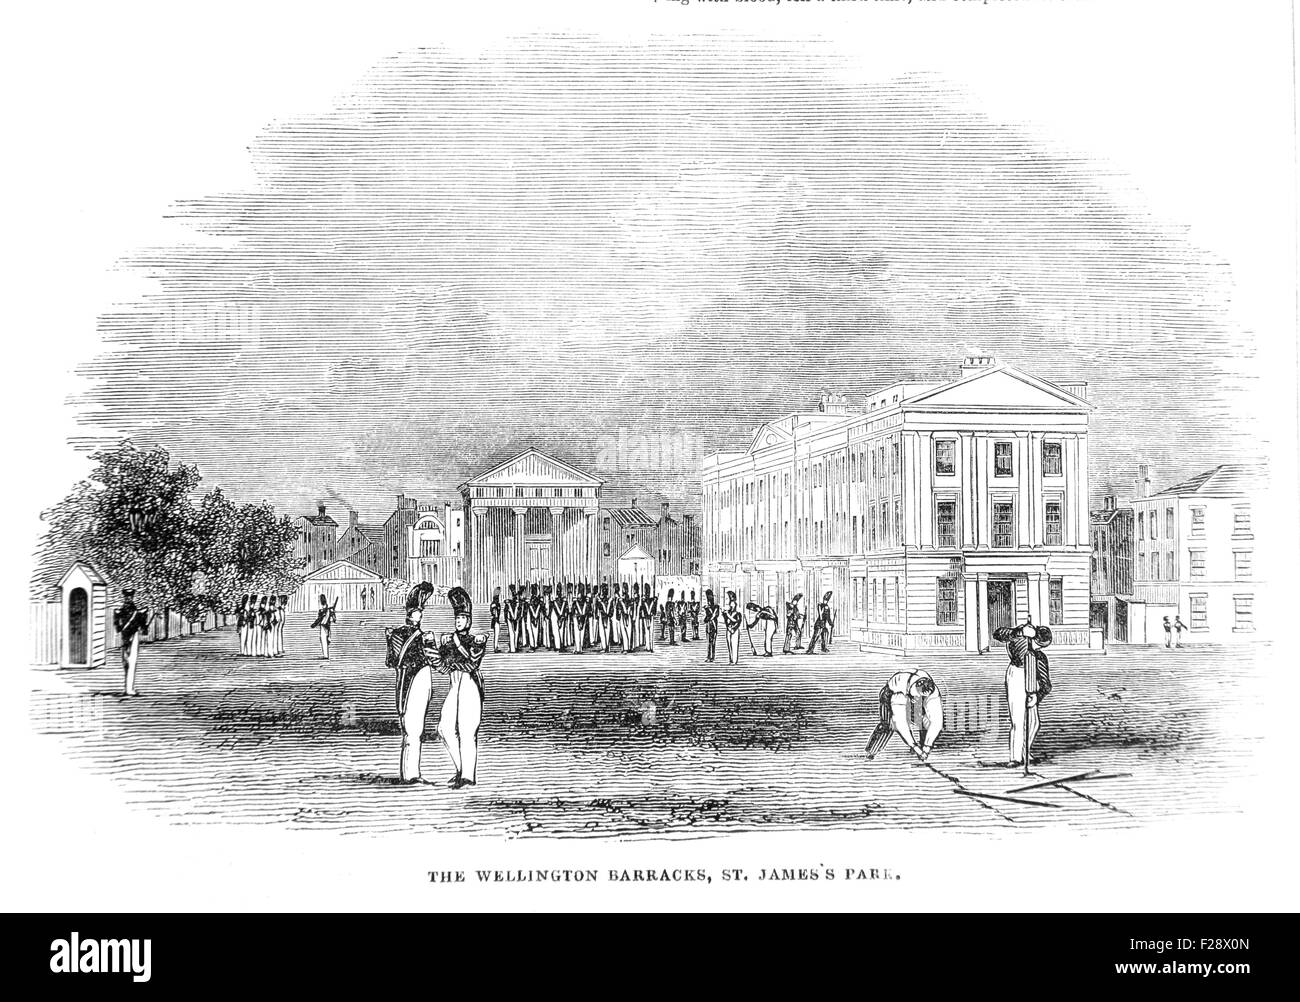 La Caserne Wellington, St Jame's Park, Londres, c1844 ; Illustrated London News Juillet 1844 ; noir et blanc Illustration ; Banque D'Images